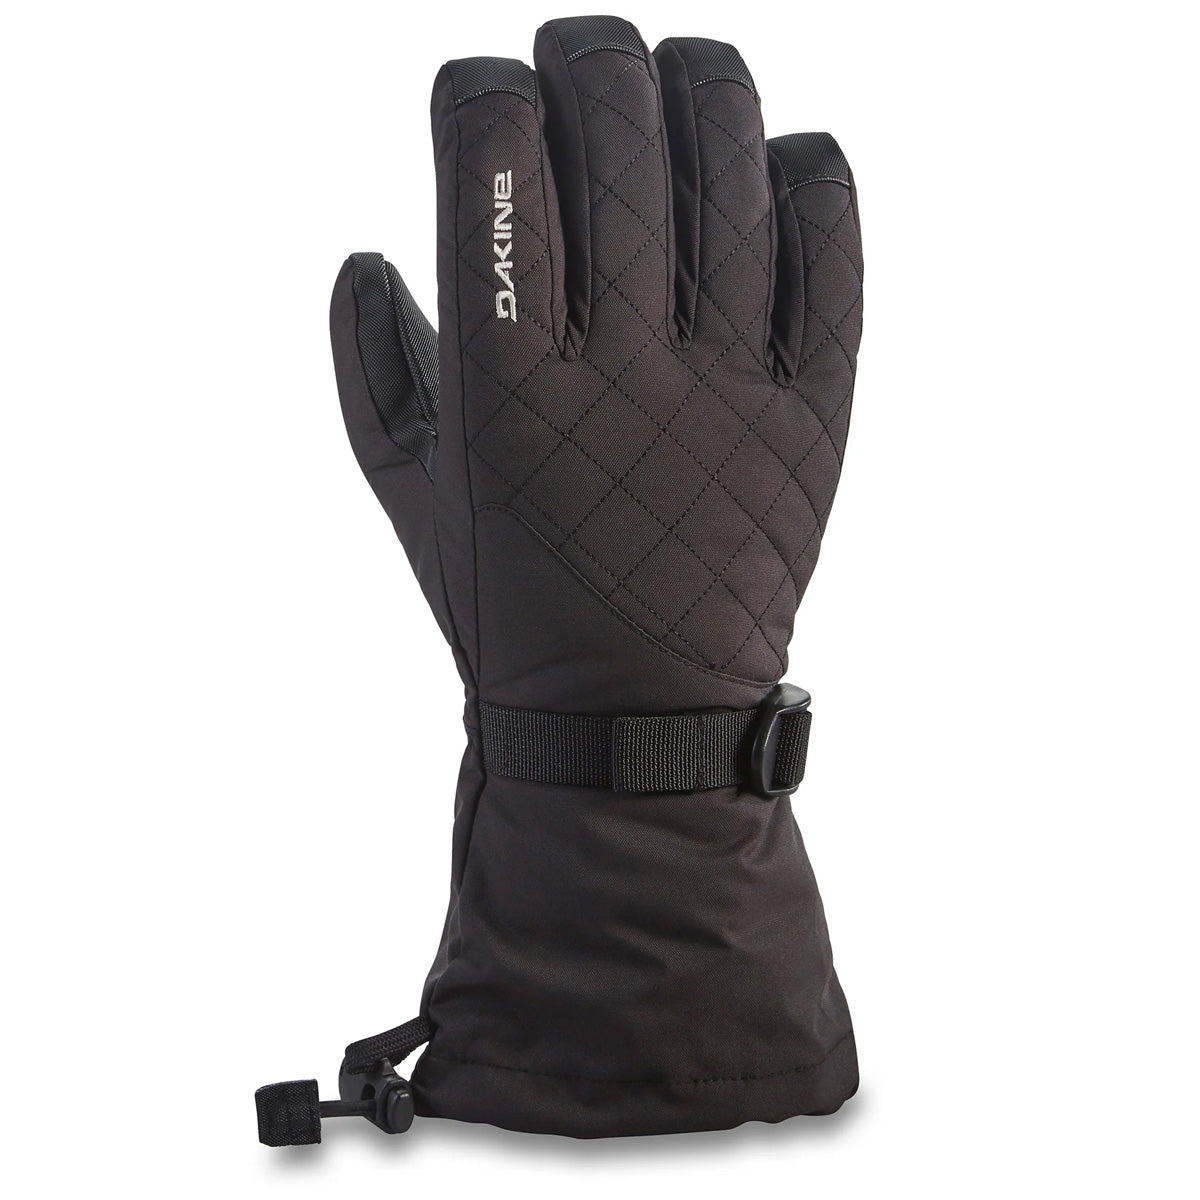 Dakine Lynx Snowboard Gloves - Black image 1